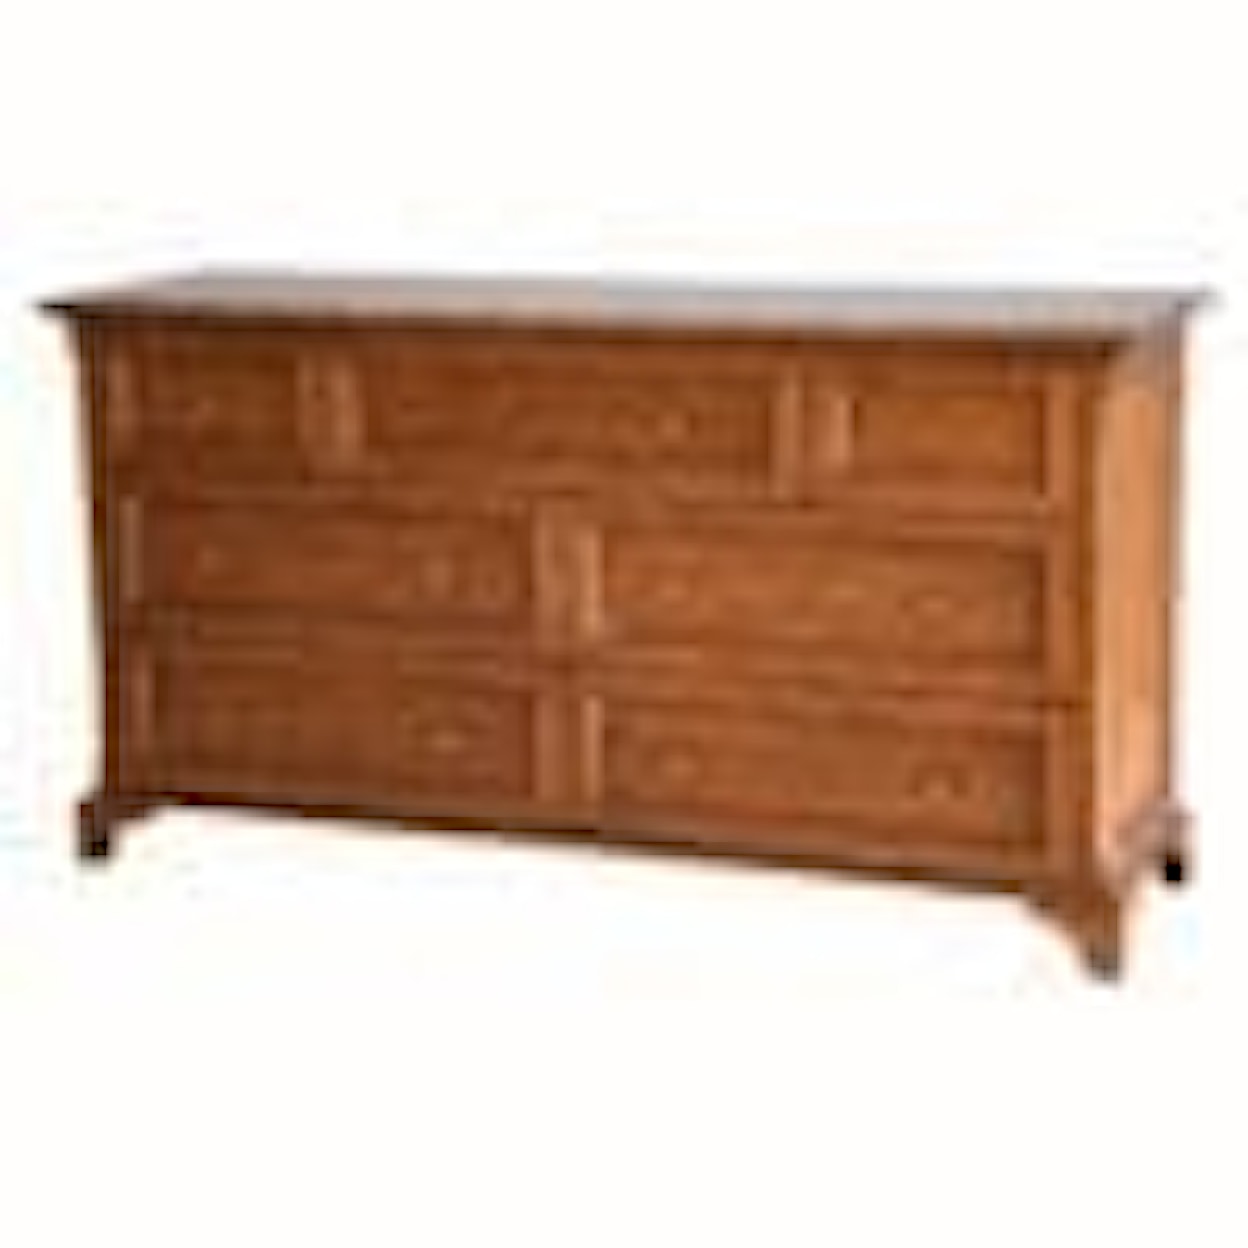 Oliver Home Furnishings Dressers Six Drawer Rustic Dresser